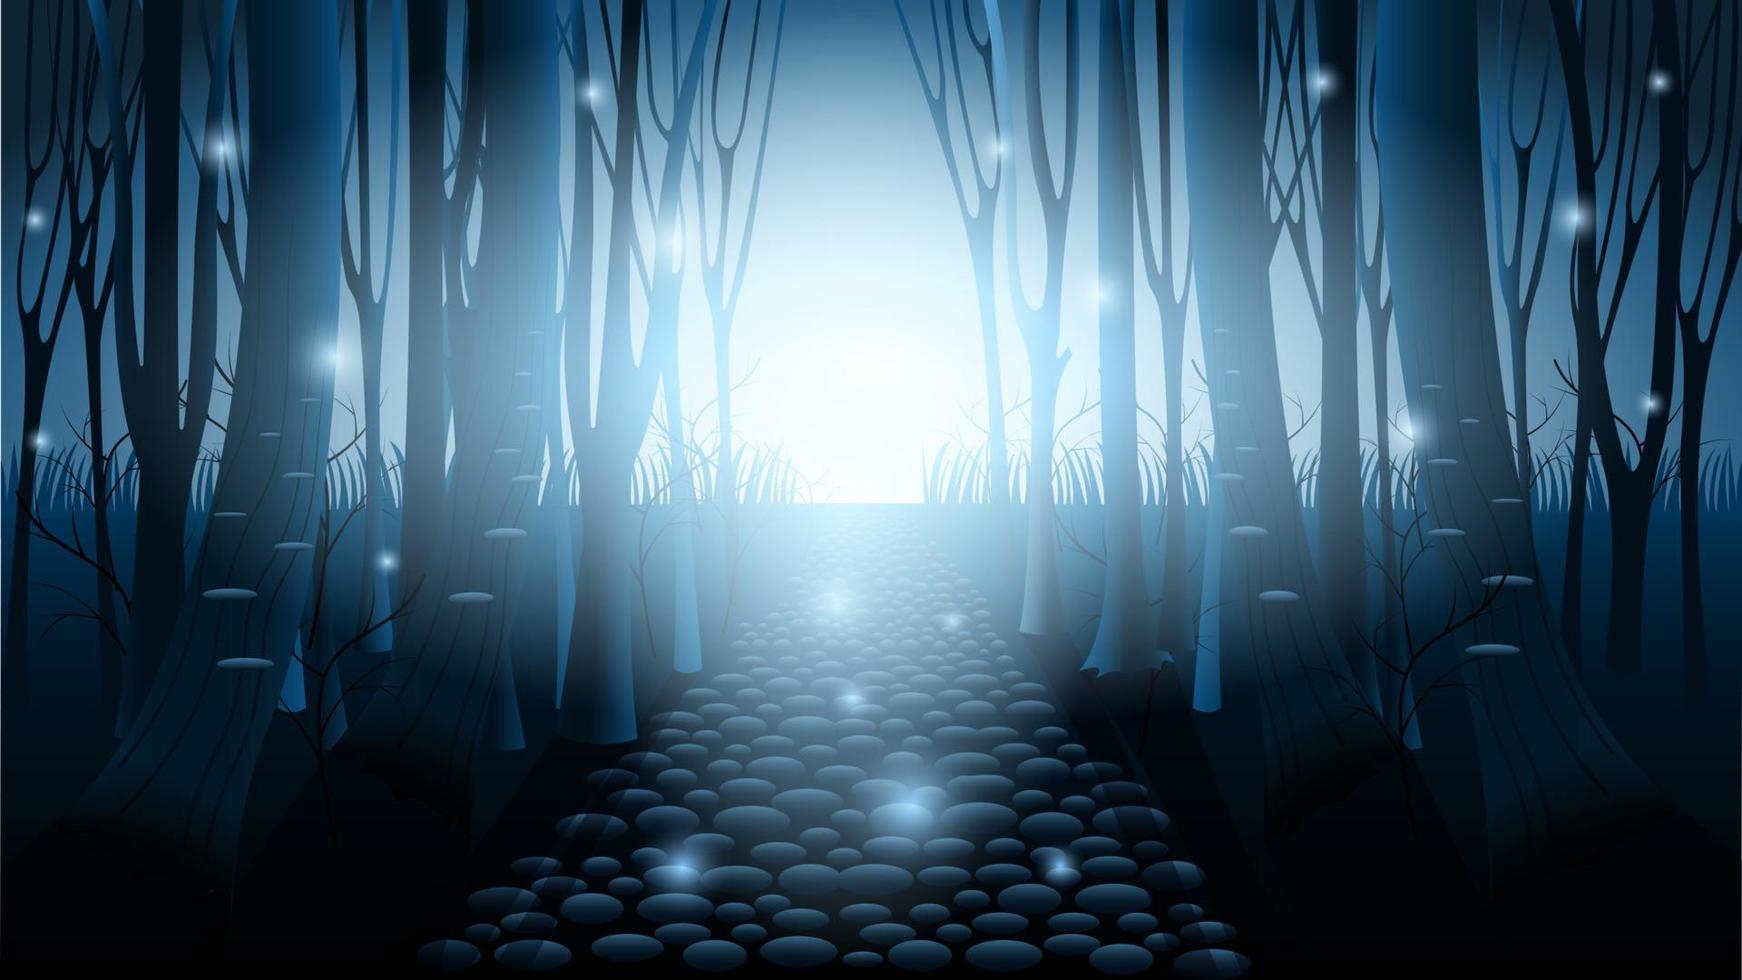 dark mysterious forest night background vector